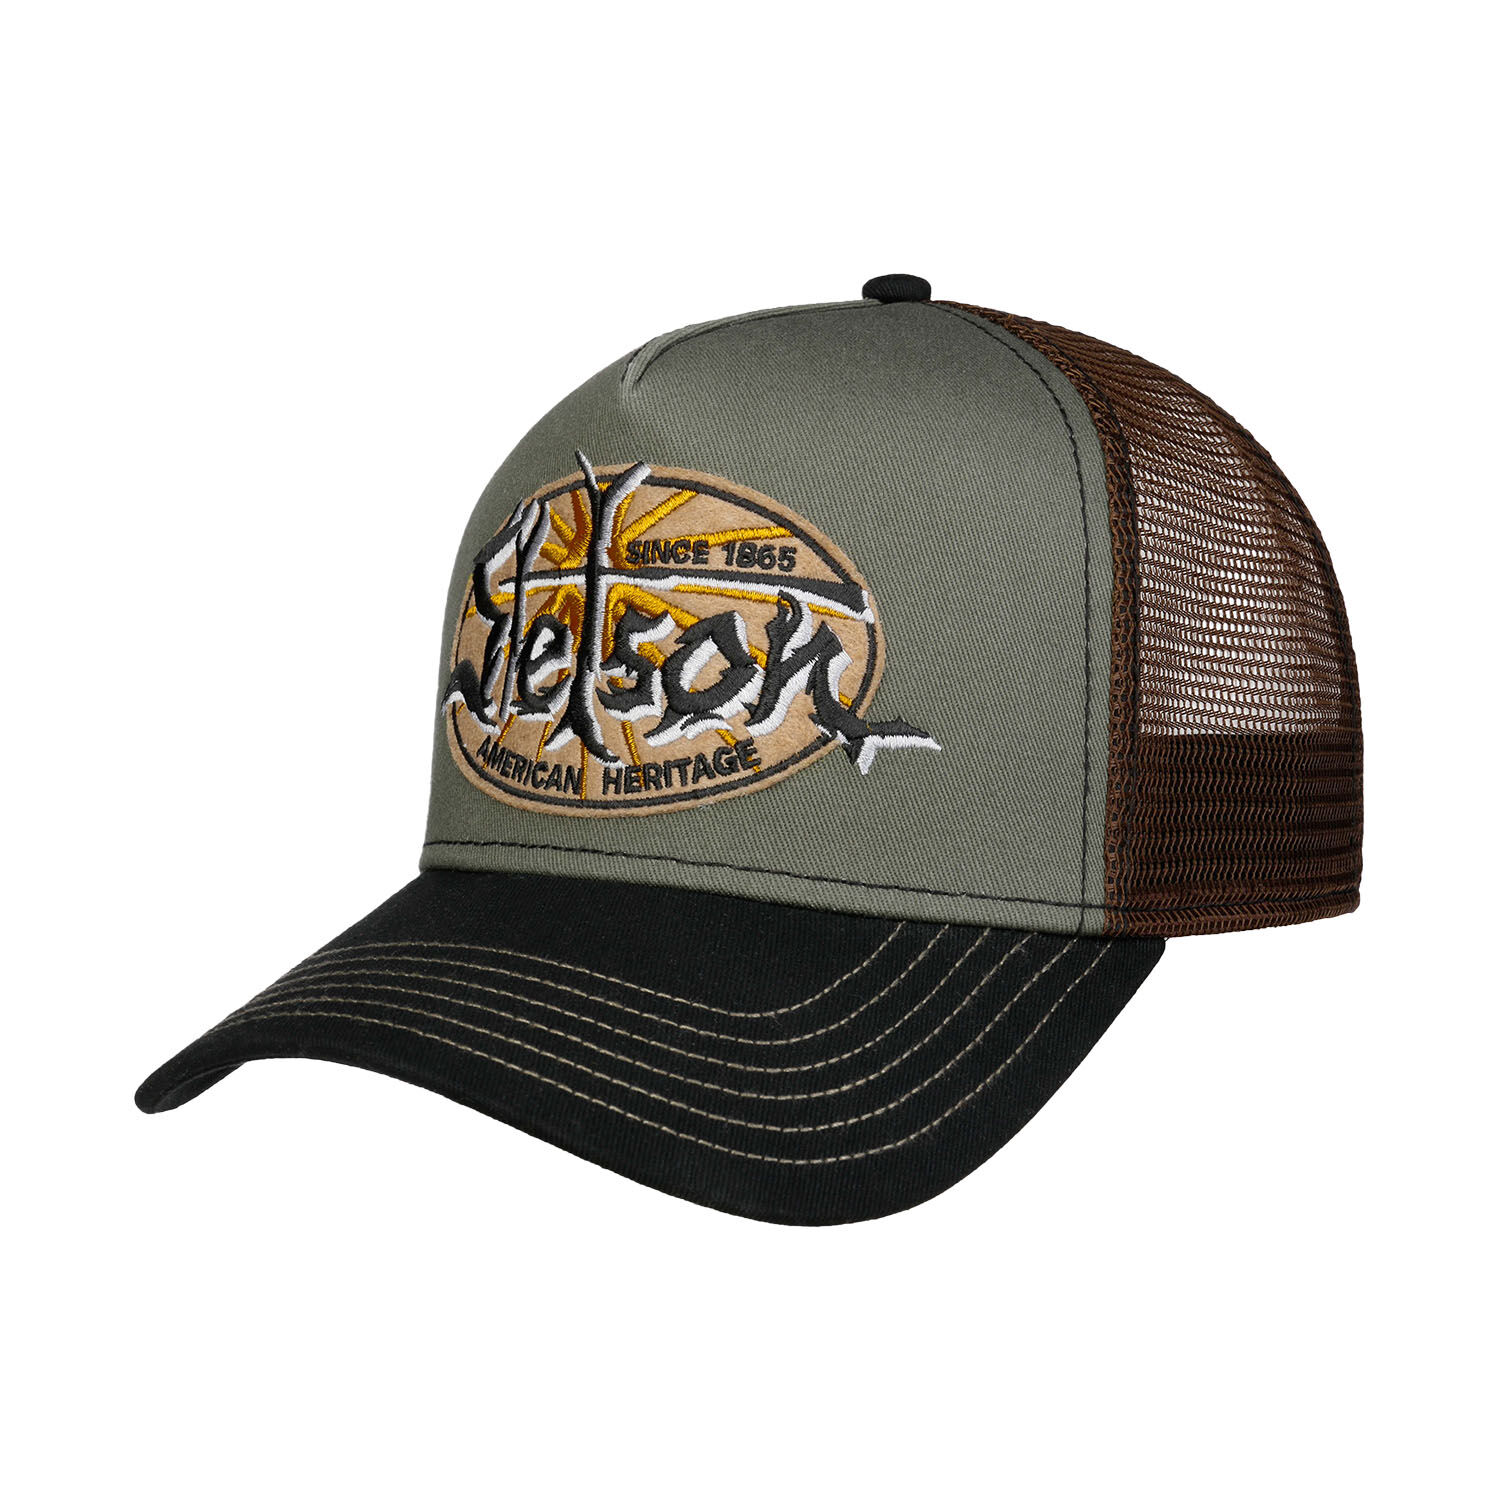 Stetson Limited Edition Cap Designed By Michael Poulsen